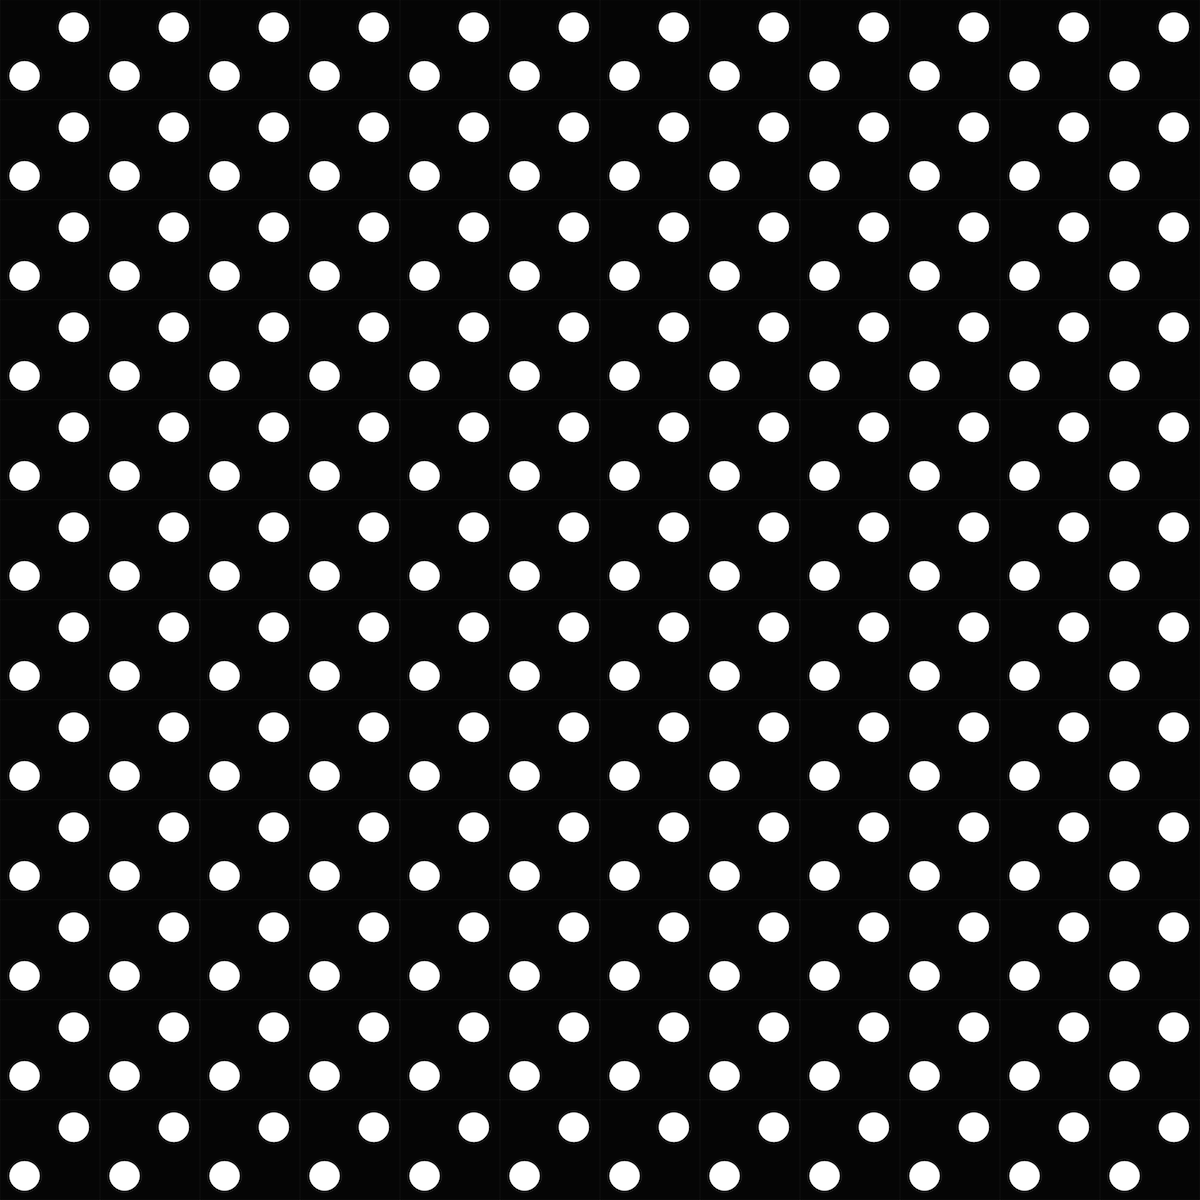 Black and White Polka Dot Pattern